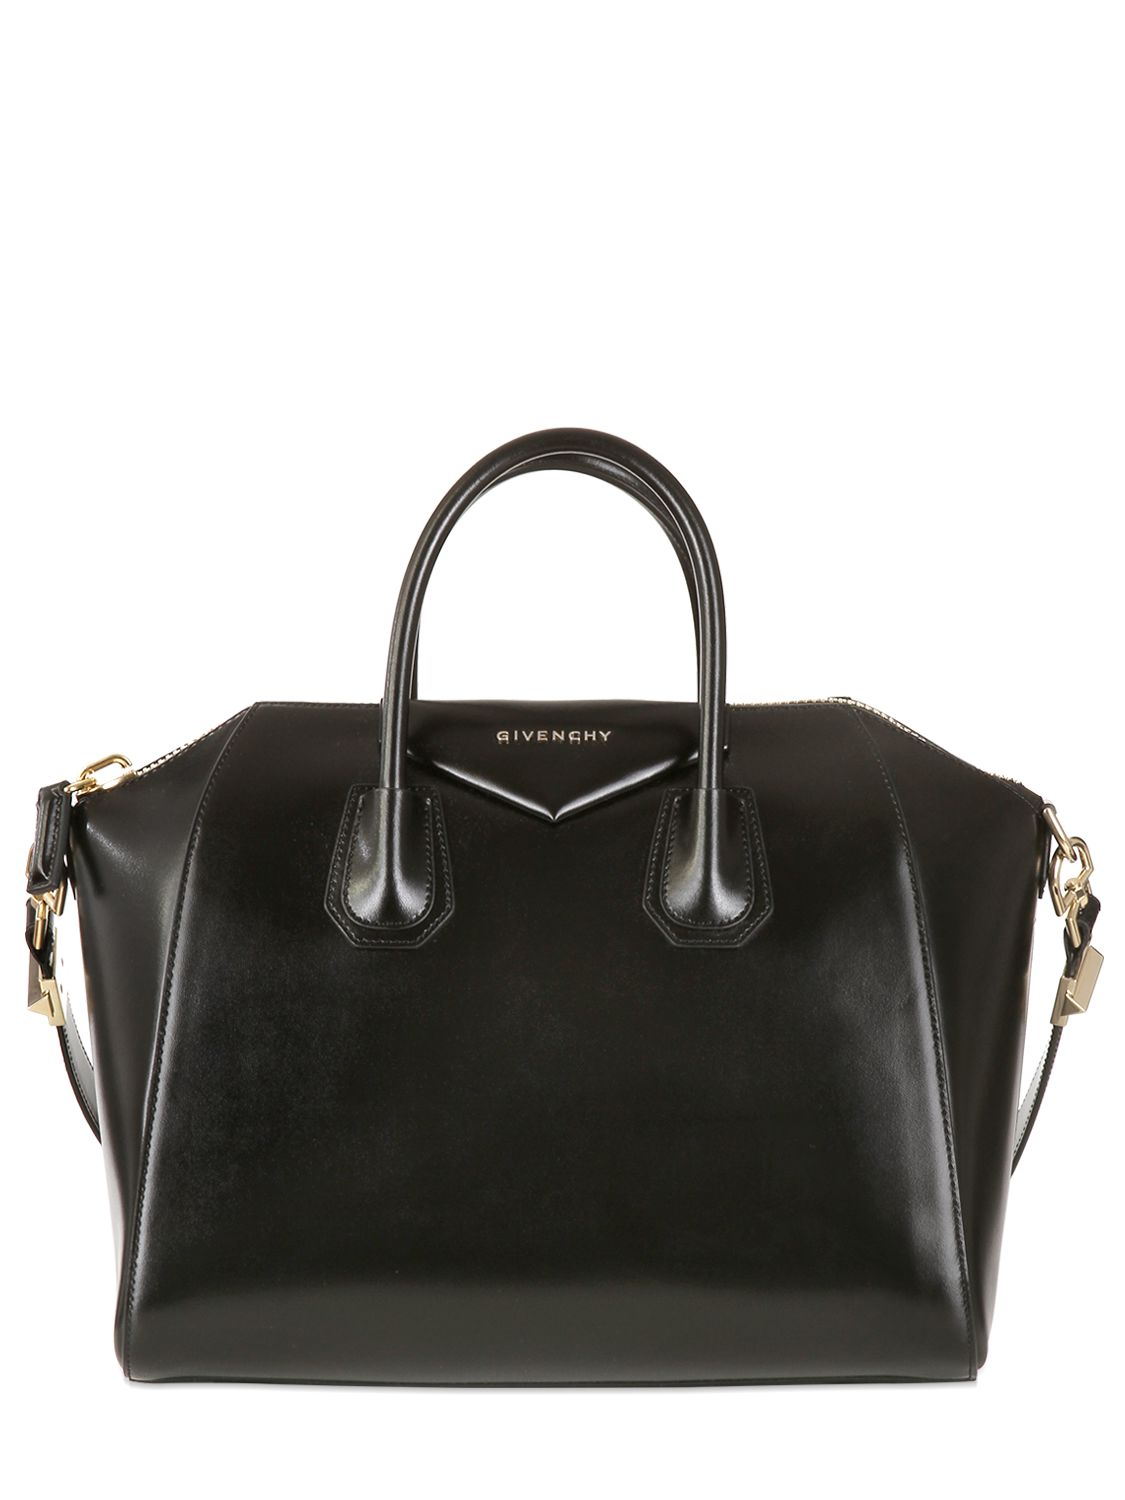 Givenchy Medium Antigona Shiny Smooth Leather Bag in Black - Lyst